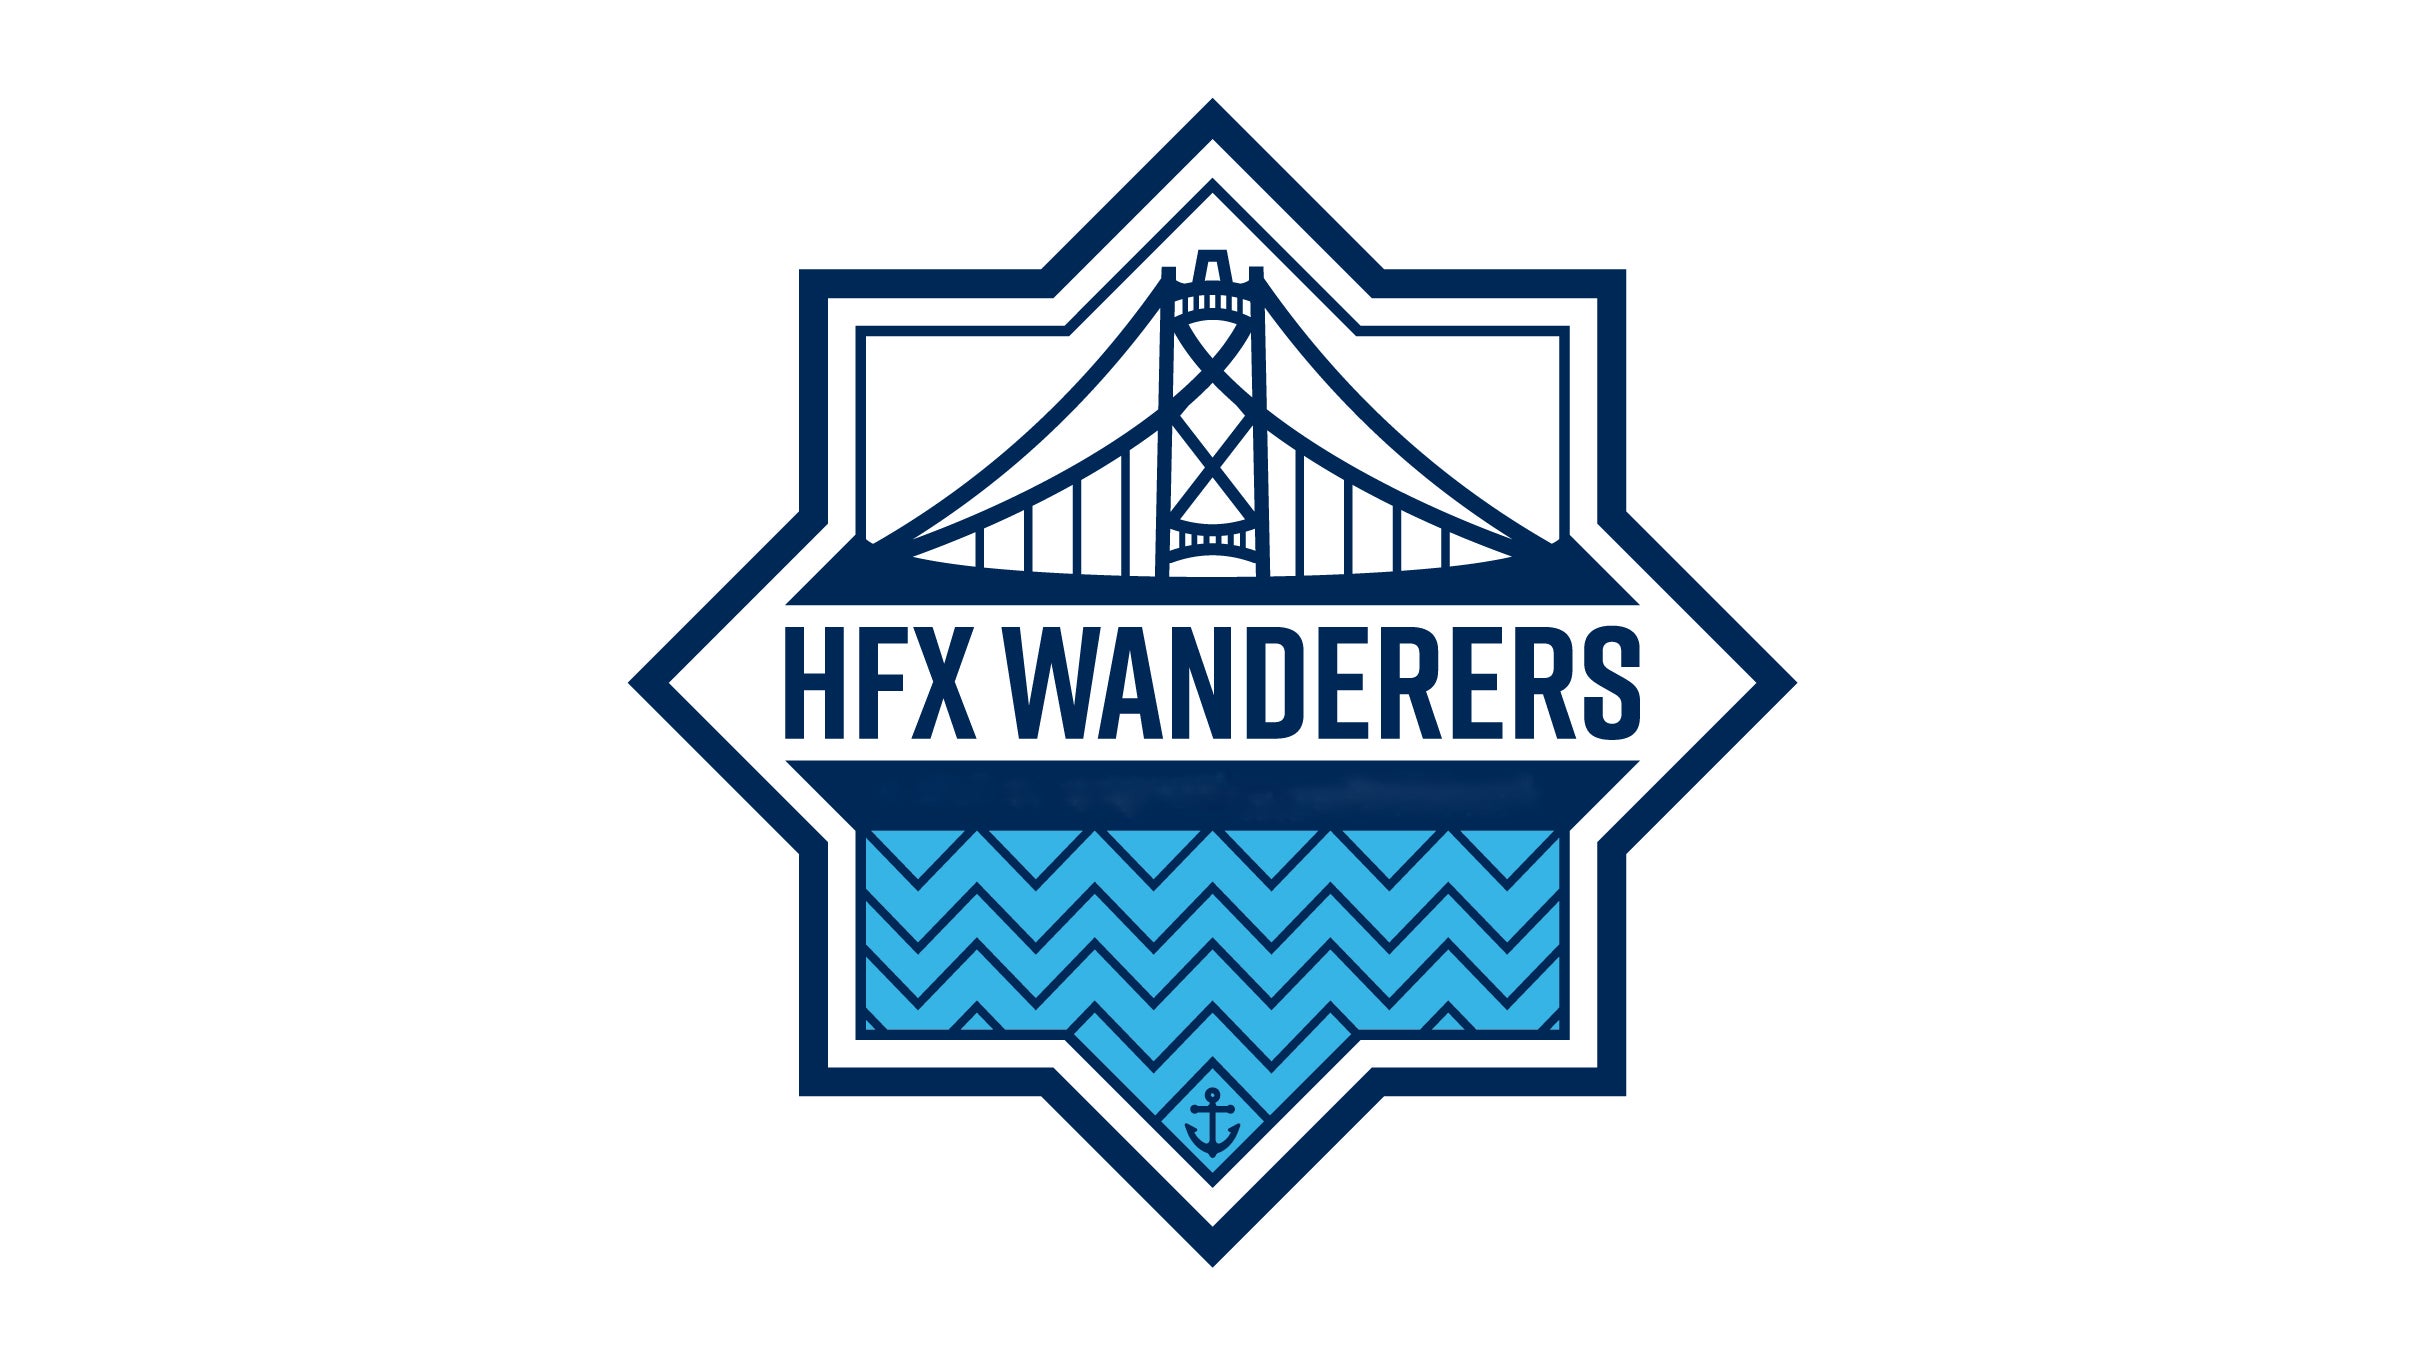 HFX Wanderers FC vs. Cavalry FC in Halifax promo photo for Westjet Rewards presale offer code